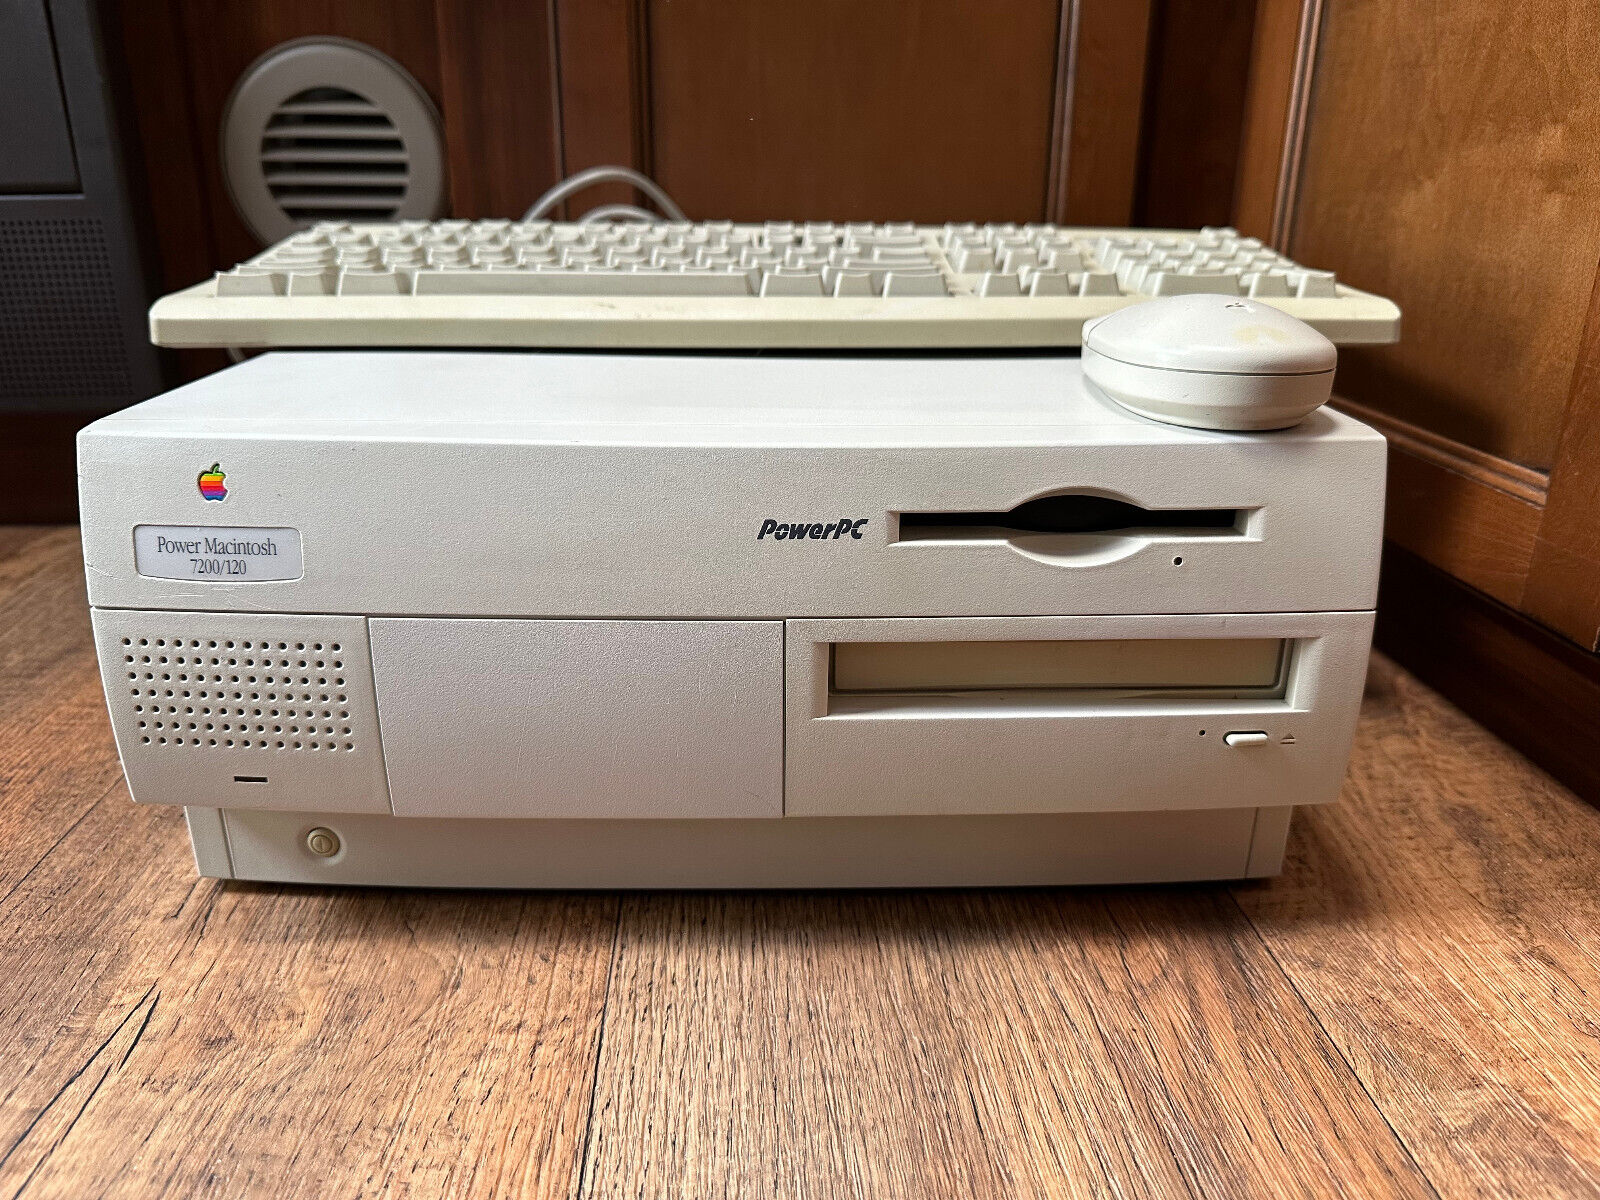 Apple Power Macintosh 7200/120 Vintage Desktop Computer 48MB RAM and 3MB VRAM